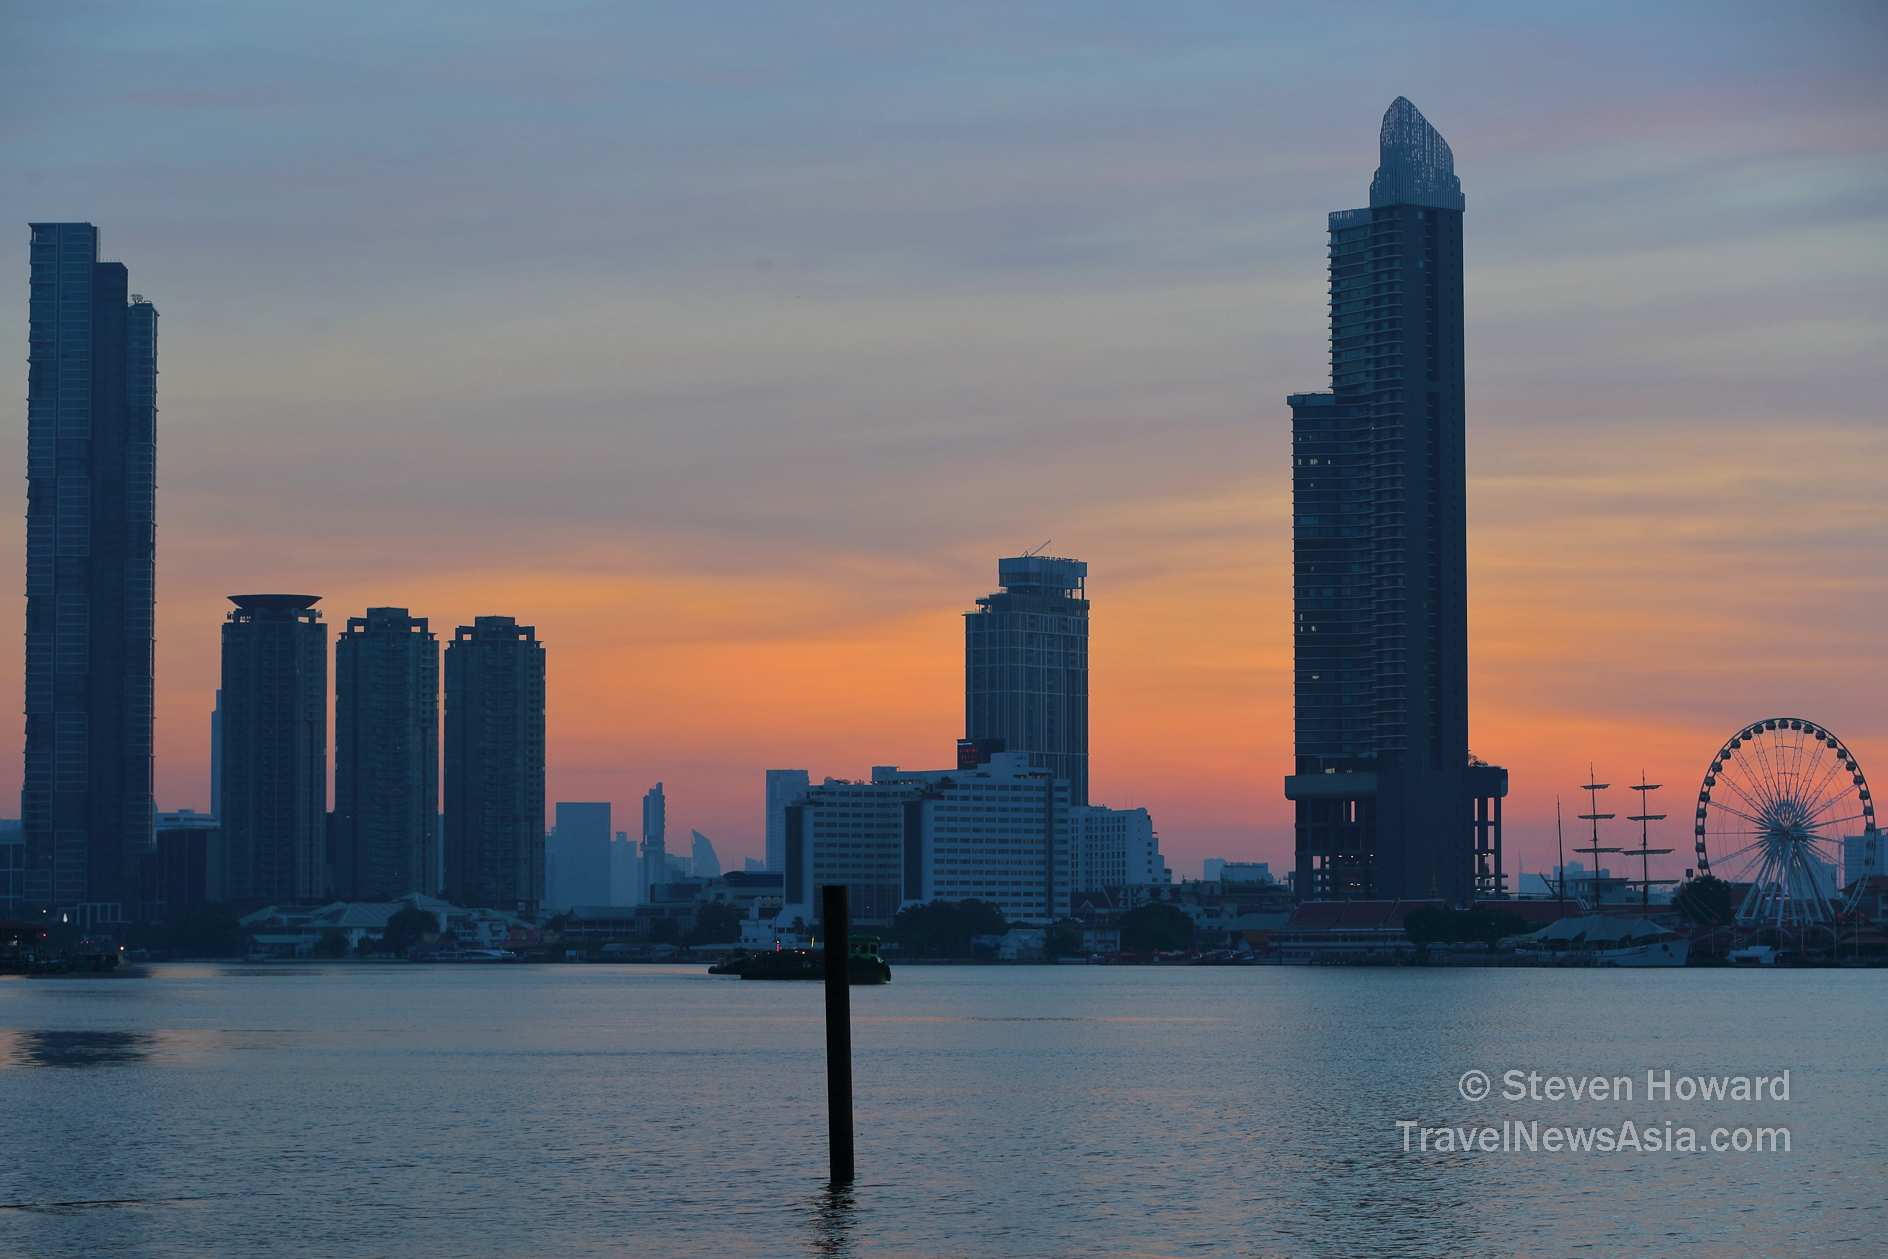 Bangkok Thailand - Image & Photo (Free Trial)